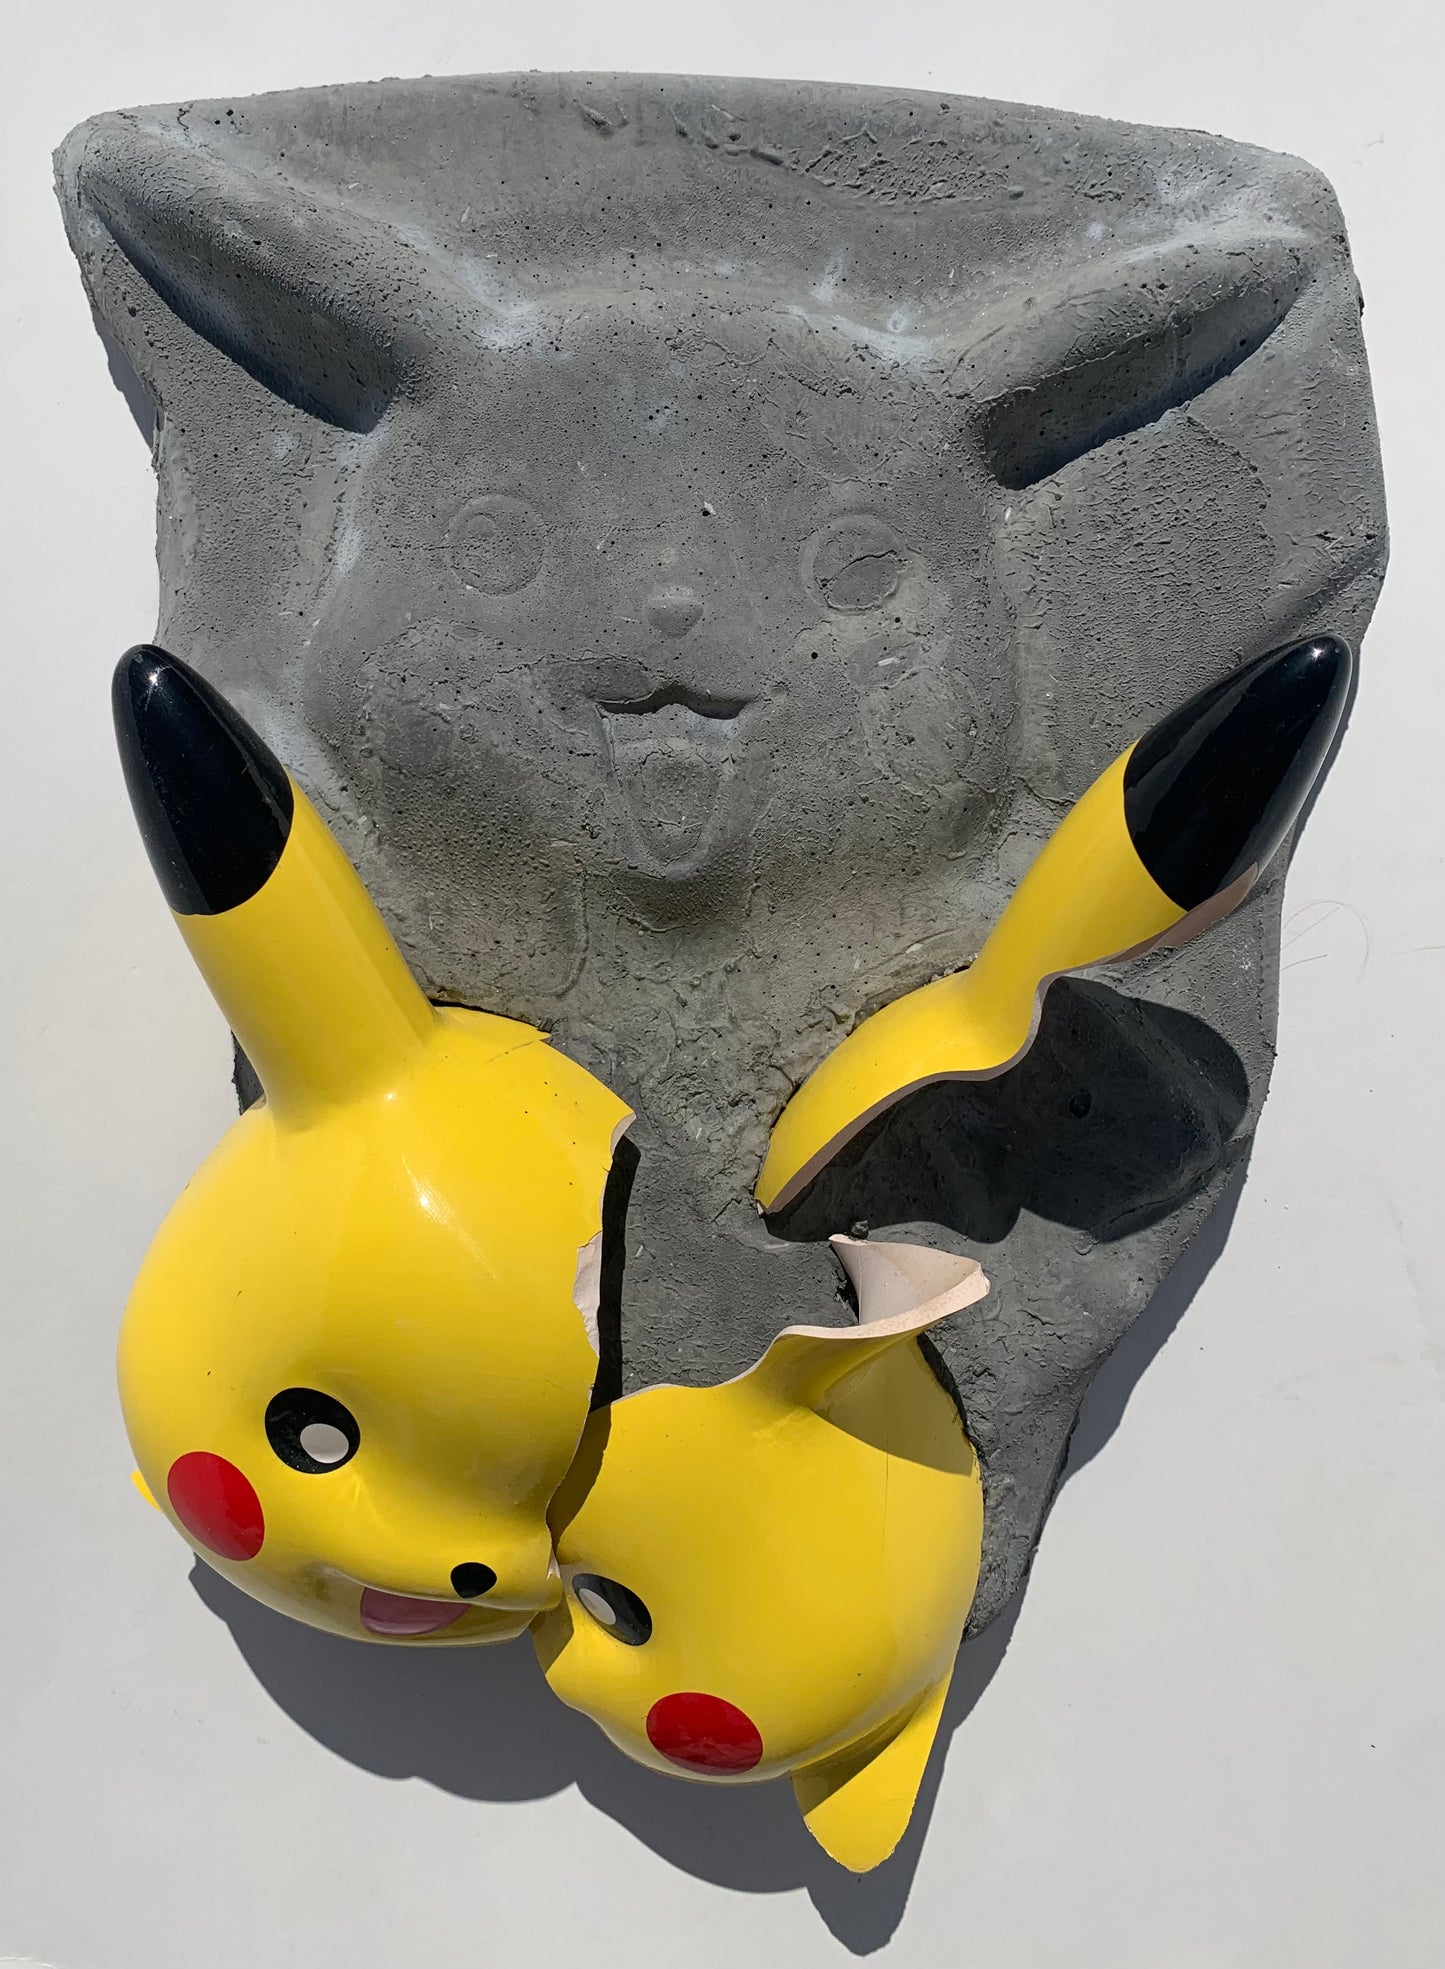 "Armed With Ears": Pikachu on Pikachu Ceramic & Concrete Japanese Invasive Smacker